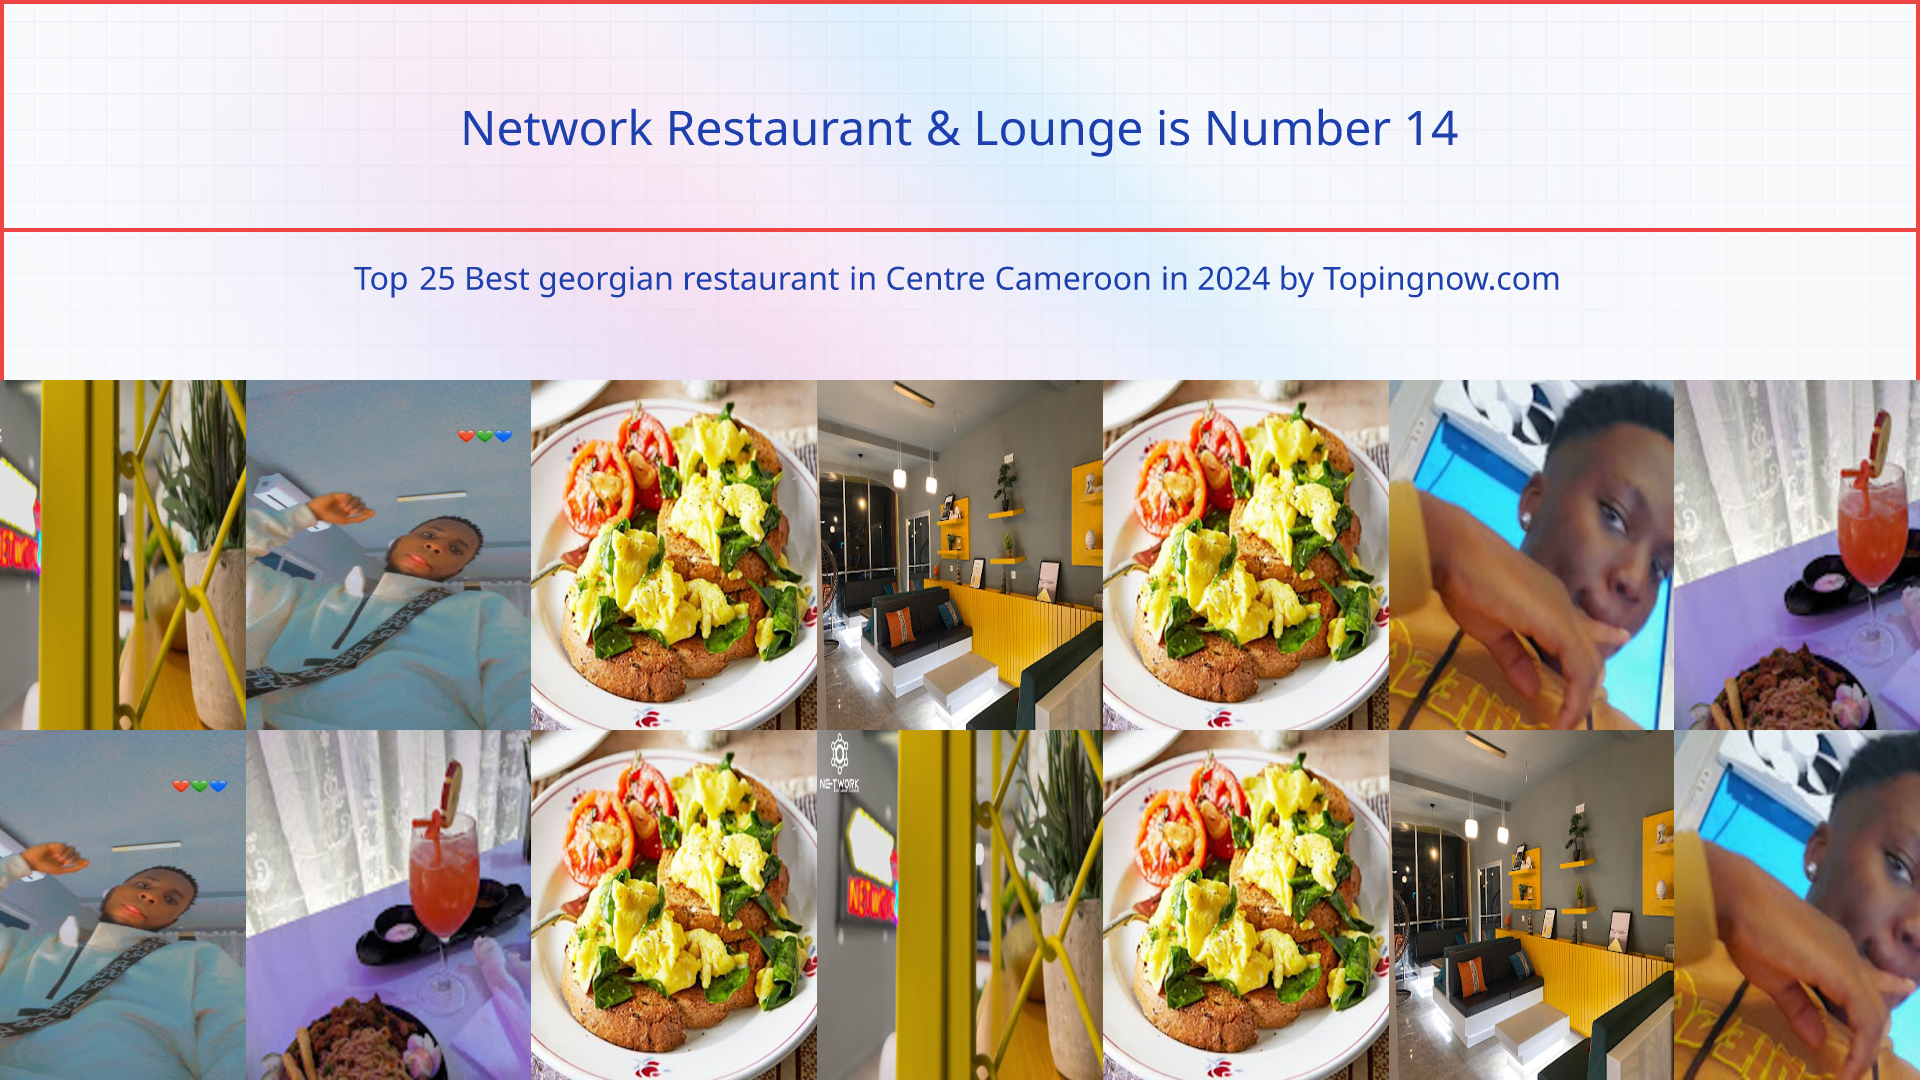 Network Restaurant & Lounge: Top 25 Best georgian restaurant in Centre Cameroon in 2024